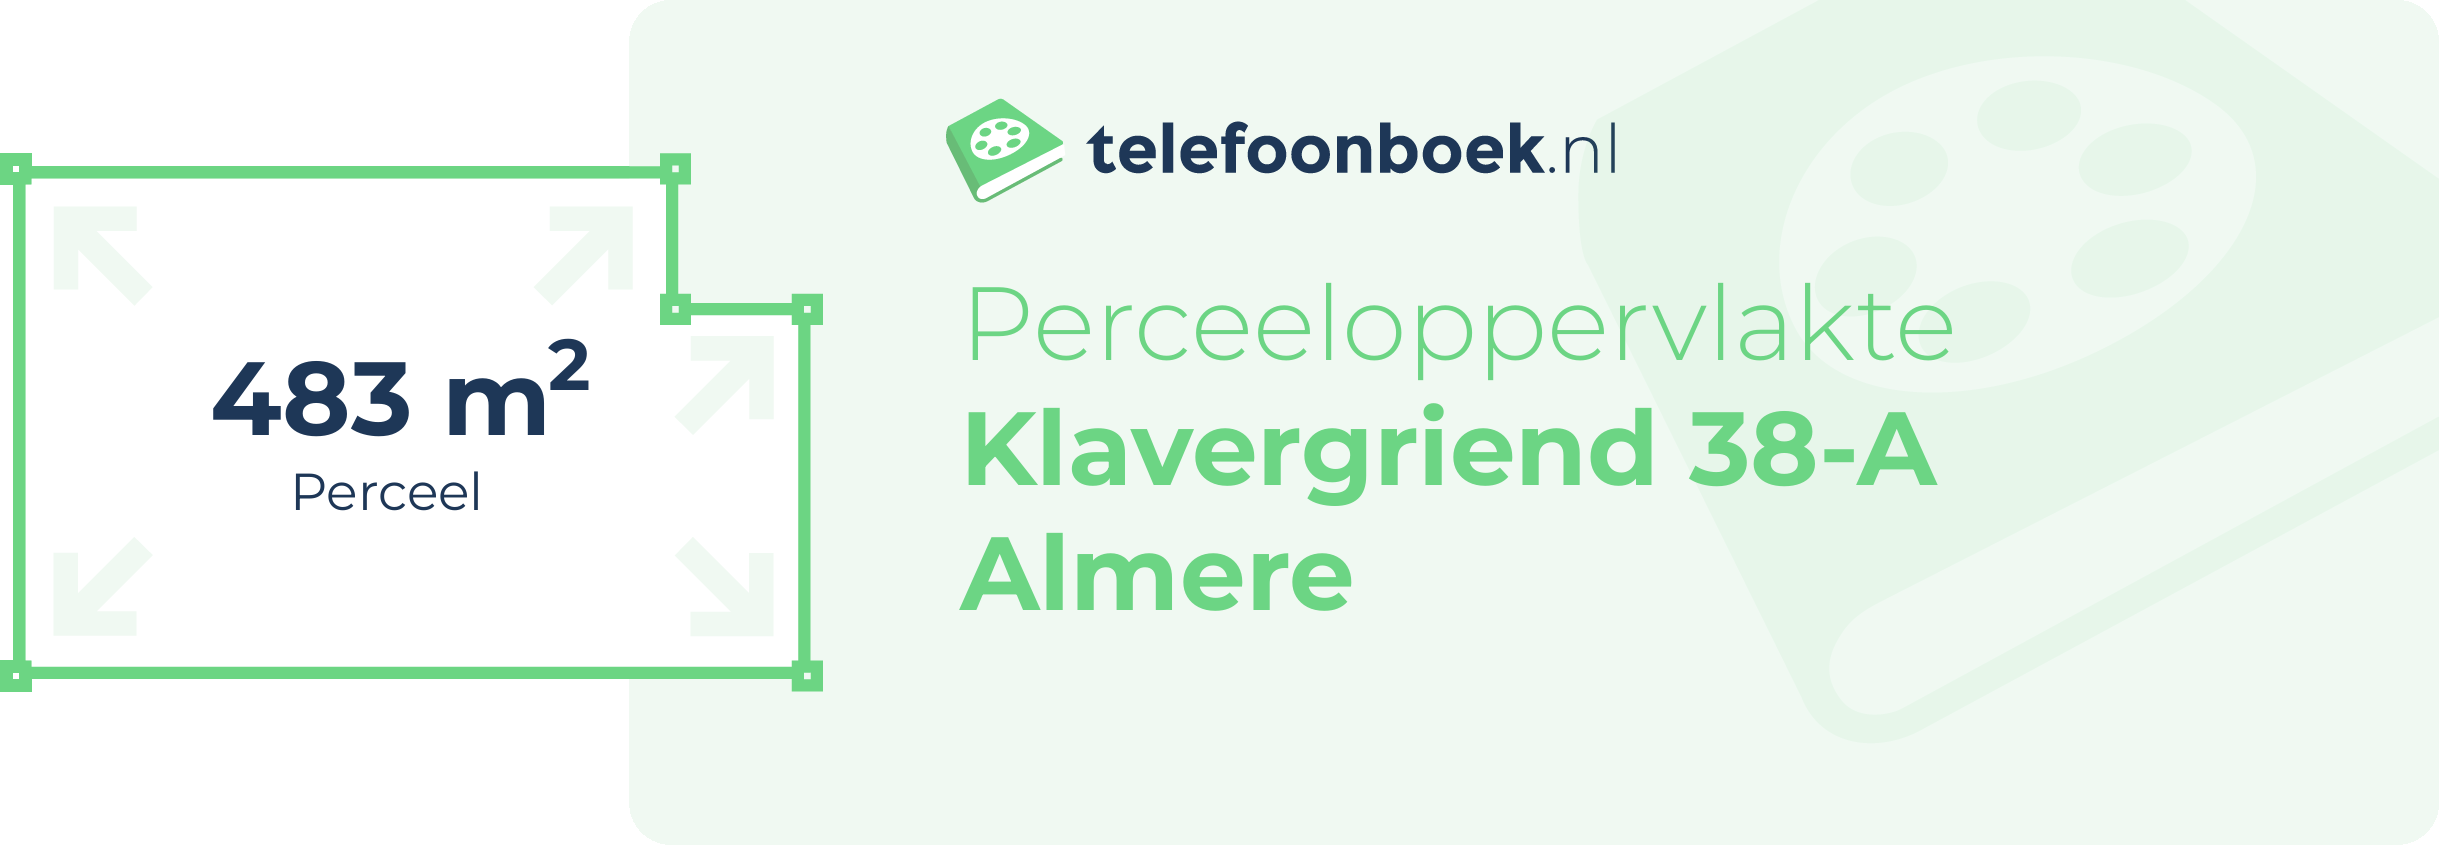 Perceeloppervlakte Klavergriend 38-A Almere